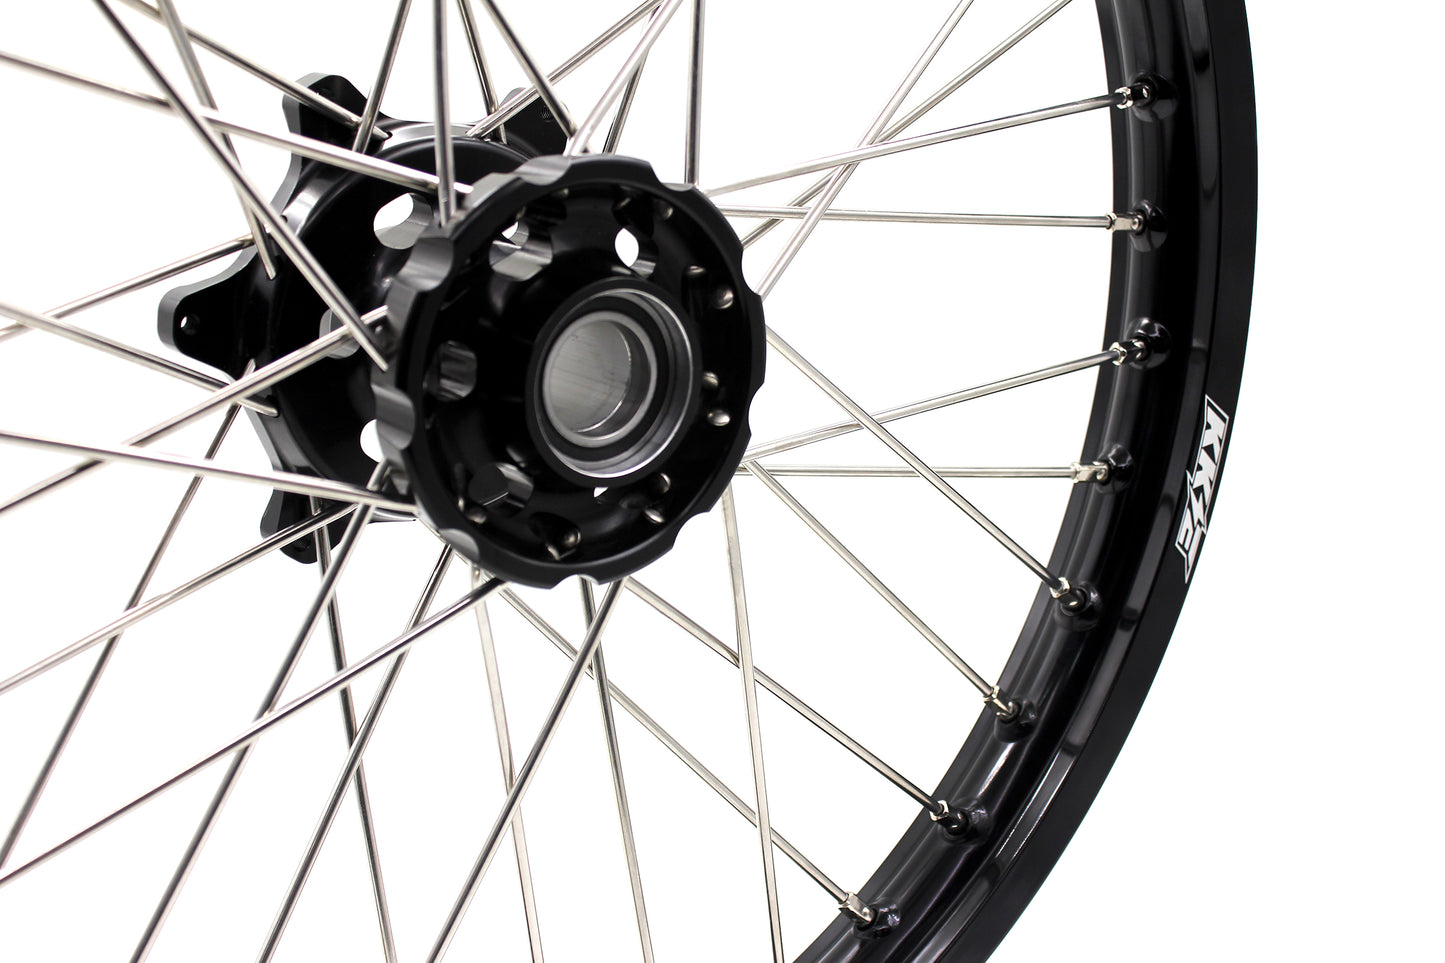 KKE Enduro 1.6*21" & 2.15*18" CNC Hub Electric Dirtbike Alloy Wheels Rims Fit STARK VARG Black Hub